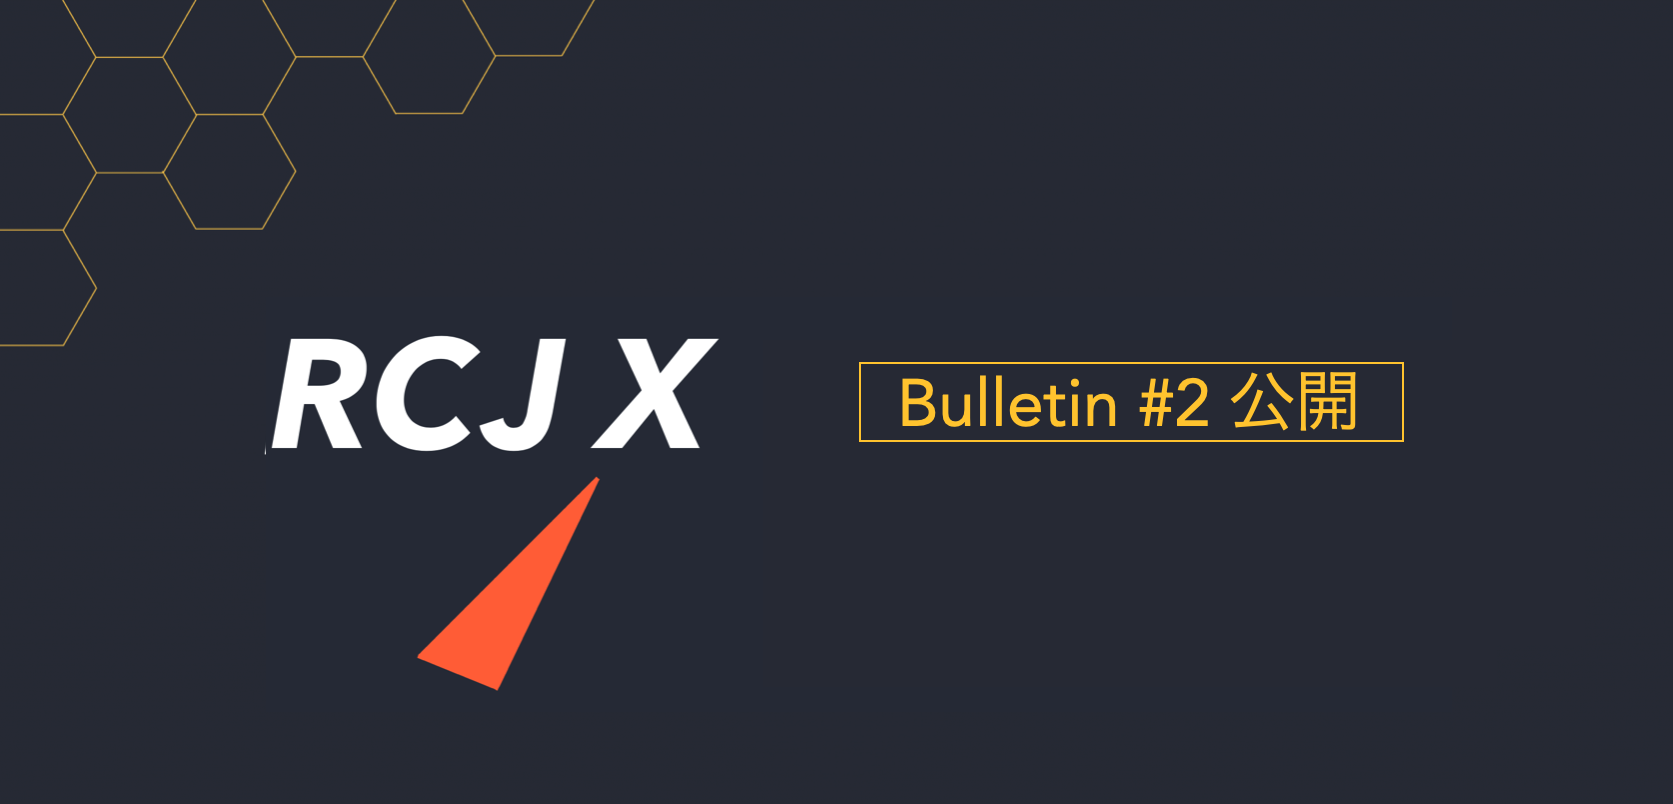 RCJ X Bulletin #2の公開